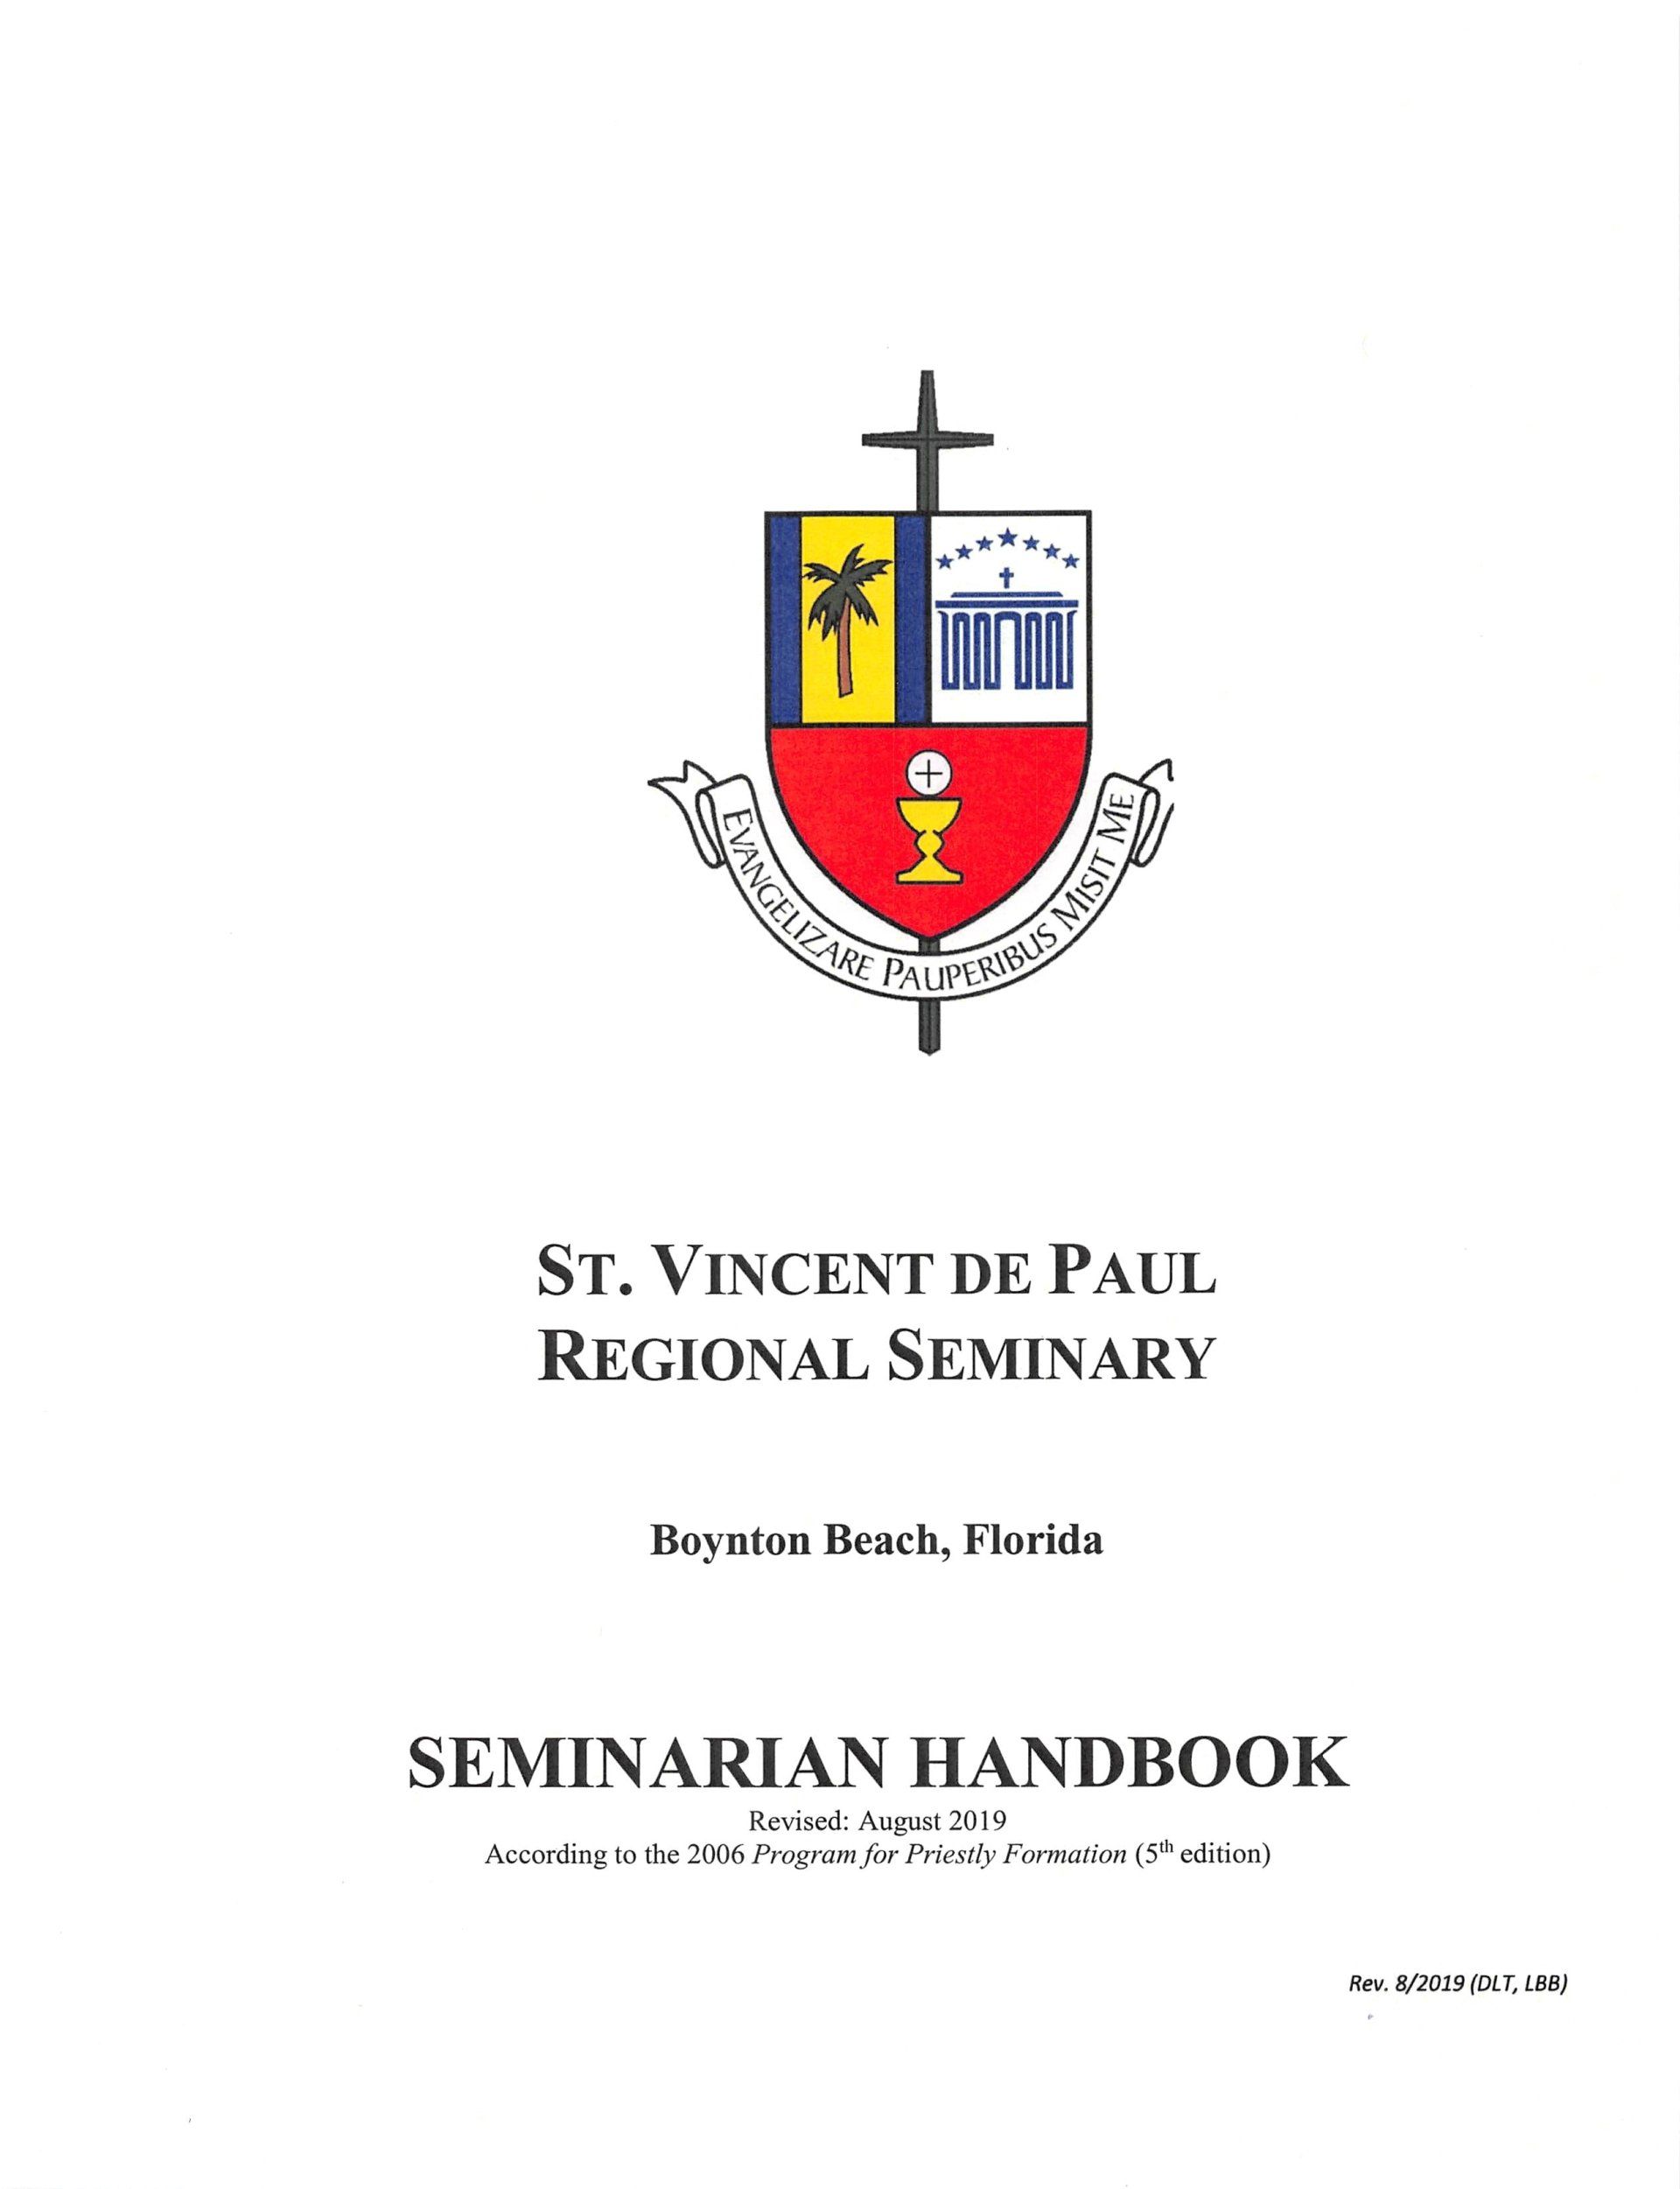 Cover Page of the Seminarian Handbook